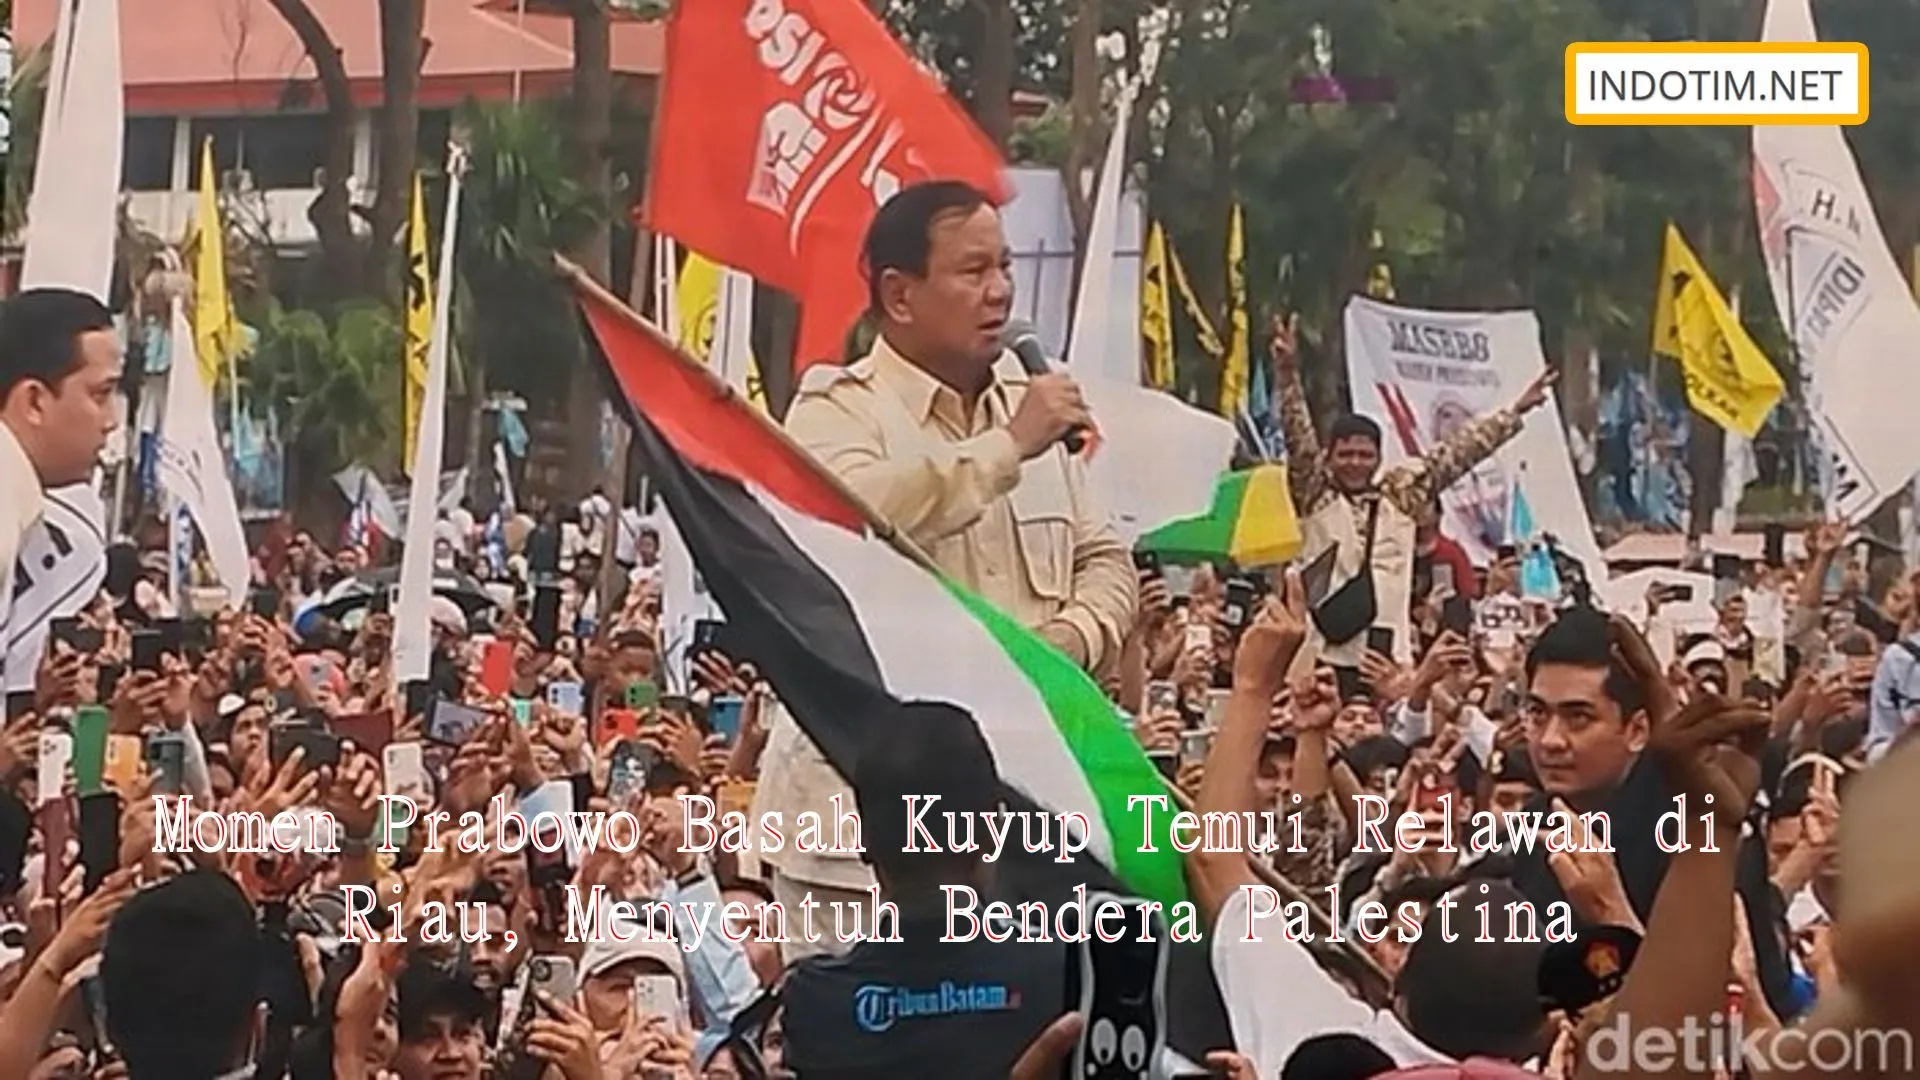 Momen Prabowo Basah Kuyup Temui Relawan di Riau, Menyentuh Bendera Palestina